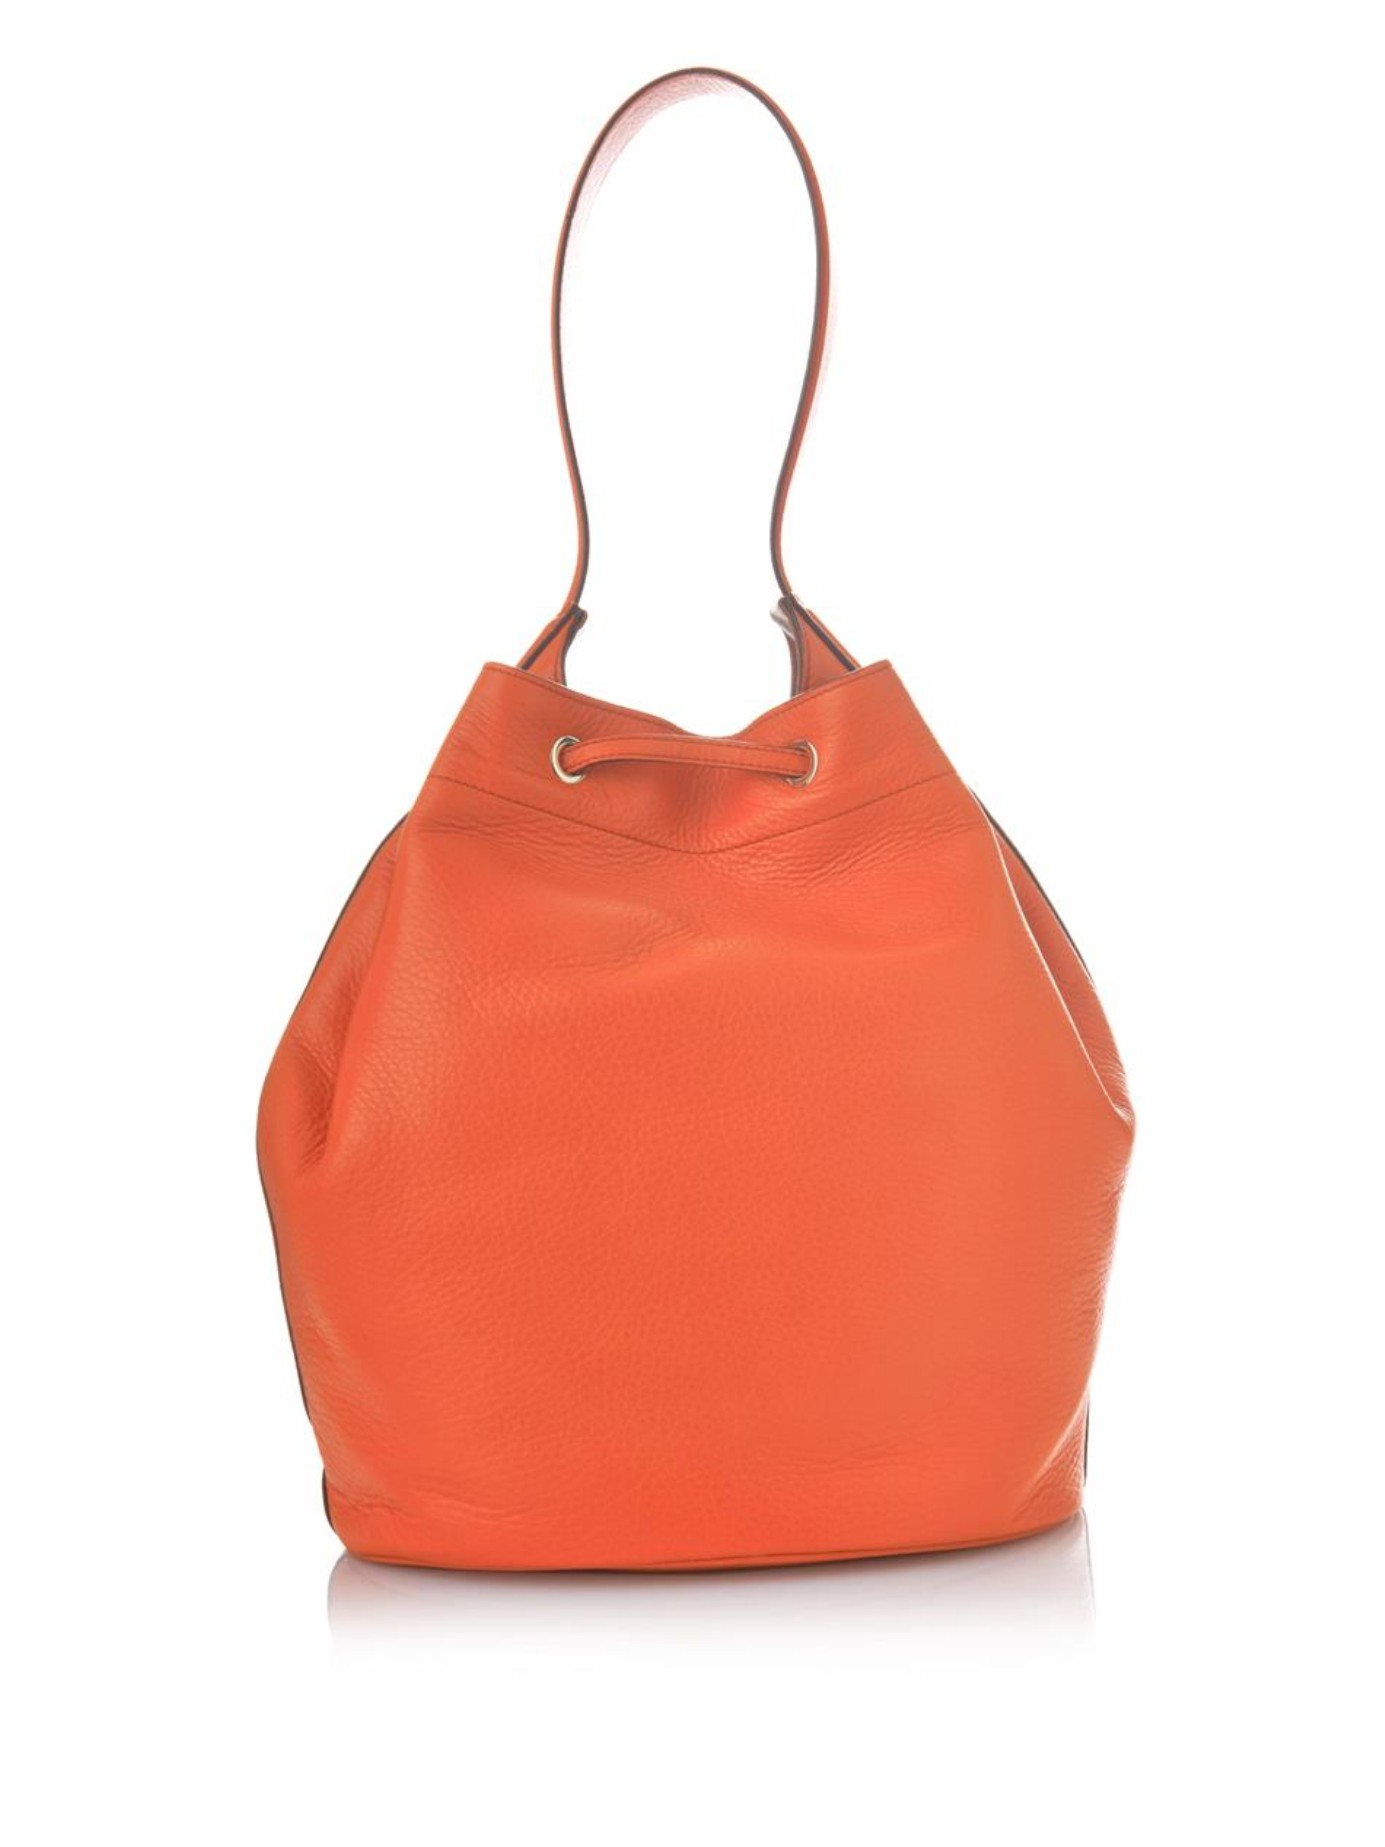 Lyst - Max Mara Leather Bucket Bag in Orange